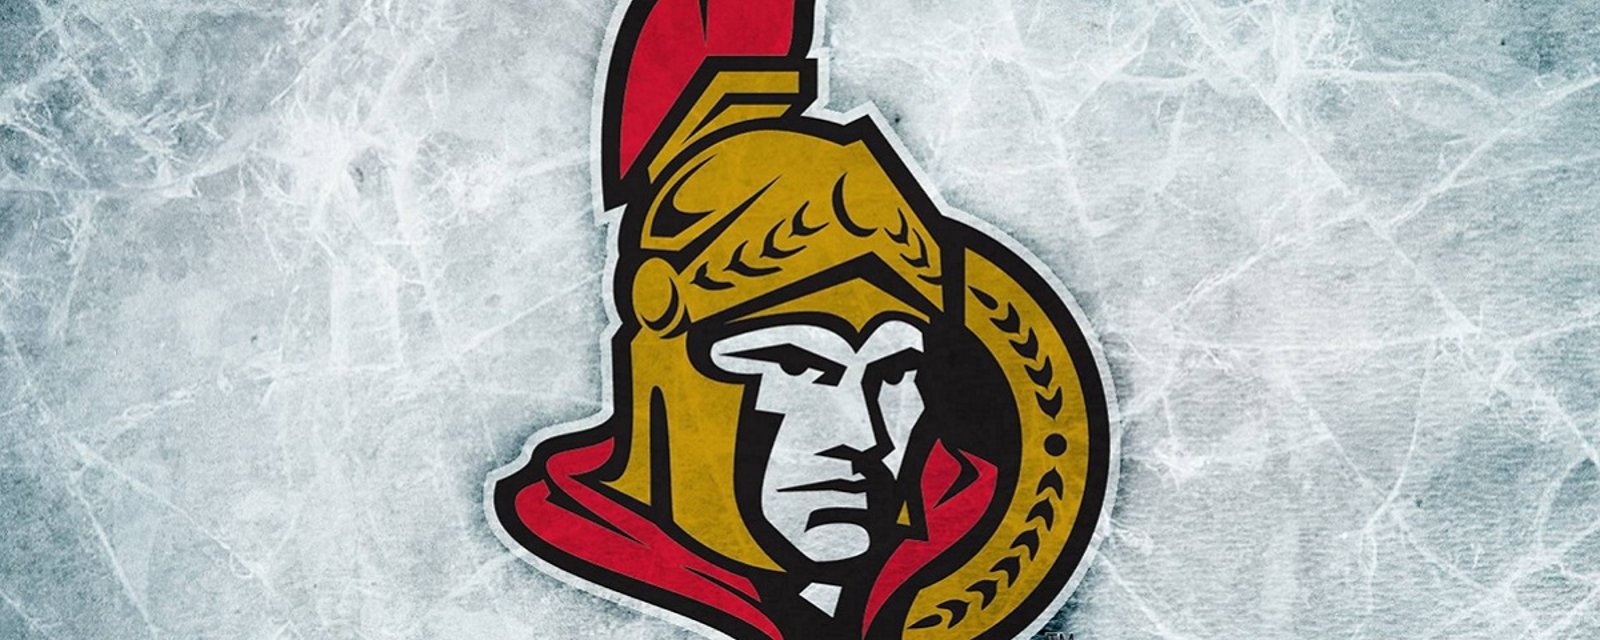 Ottawa Senators announce new general manager on Sunday.